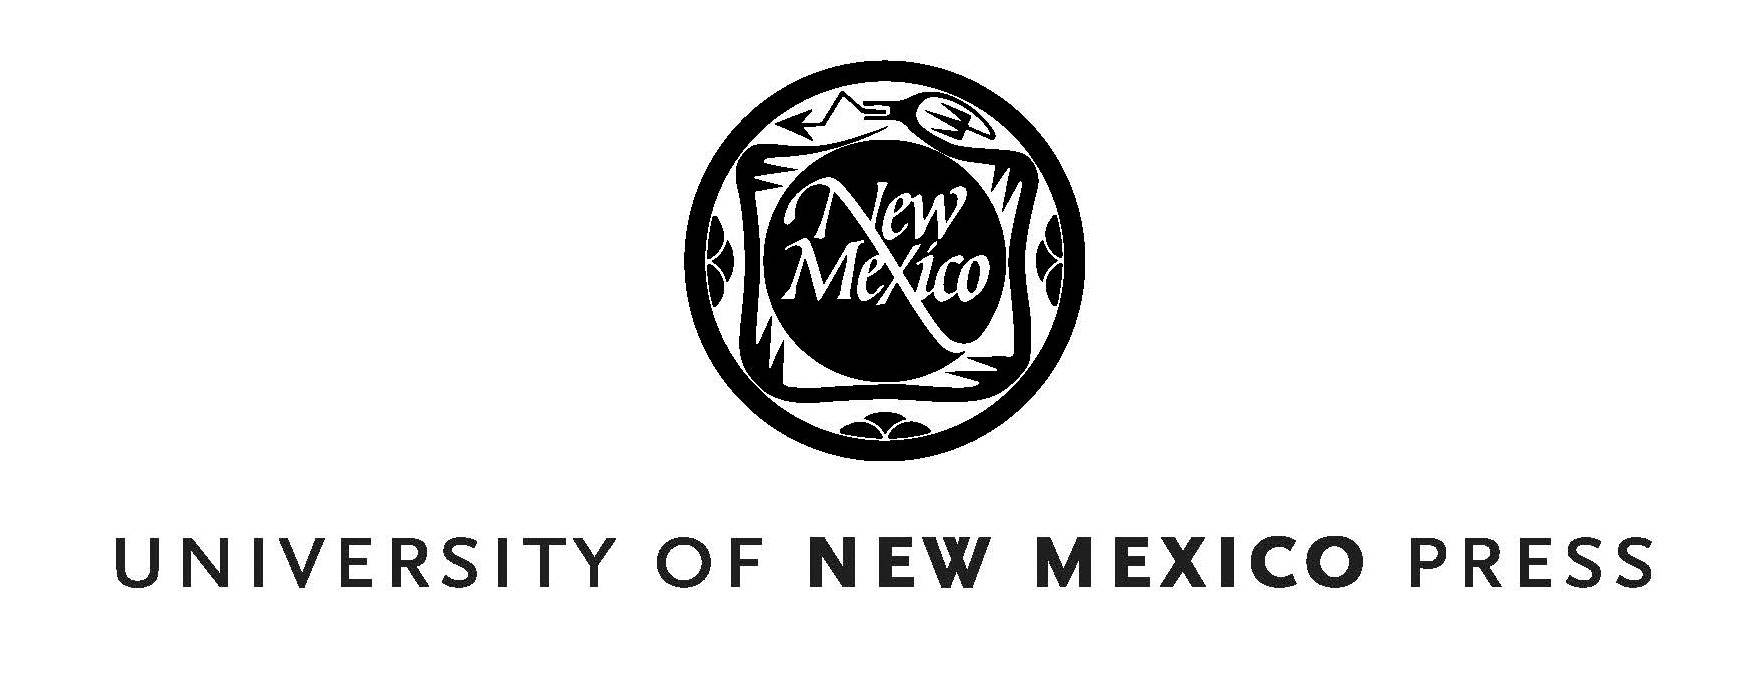 University Of New Mexico Press Logo Wallpaper